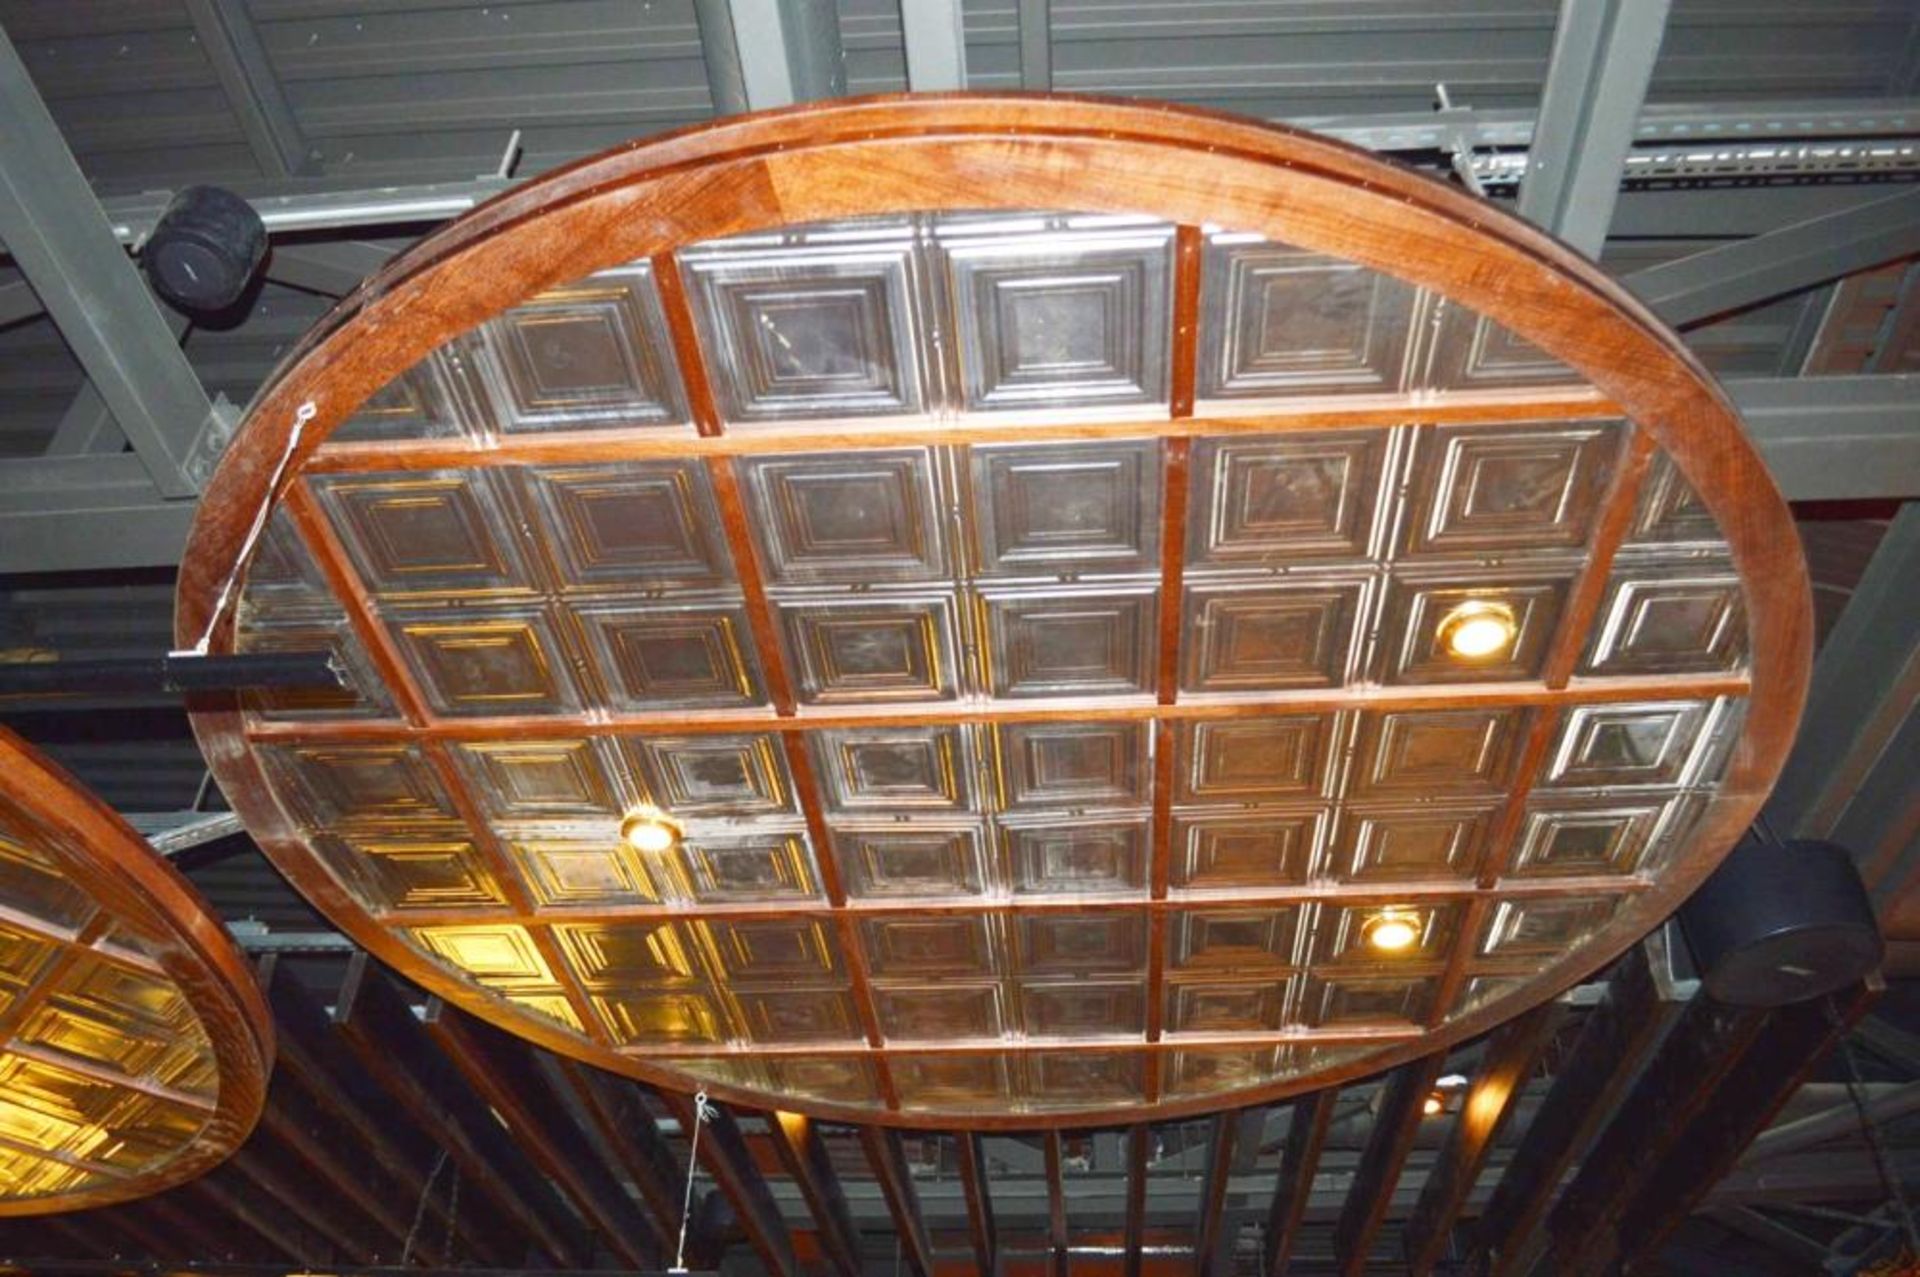 1 x Bespoke Suspended Round Ceiling Panel in Dark Wood With Glass Inserts - Approx 3 Meter - Bild 2 aus 6